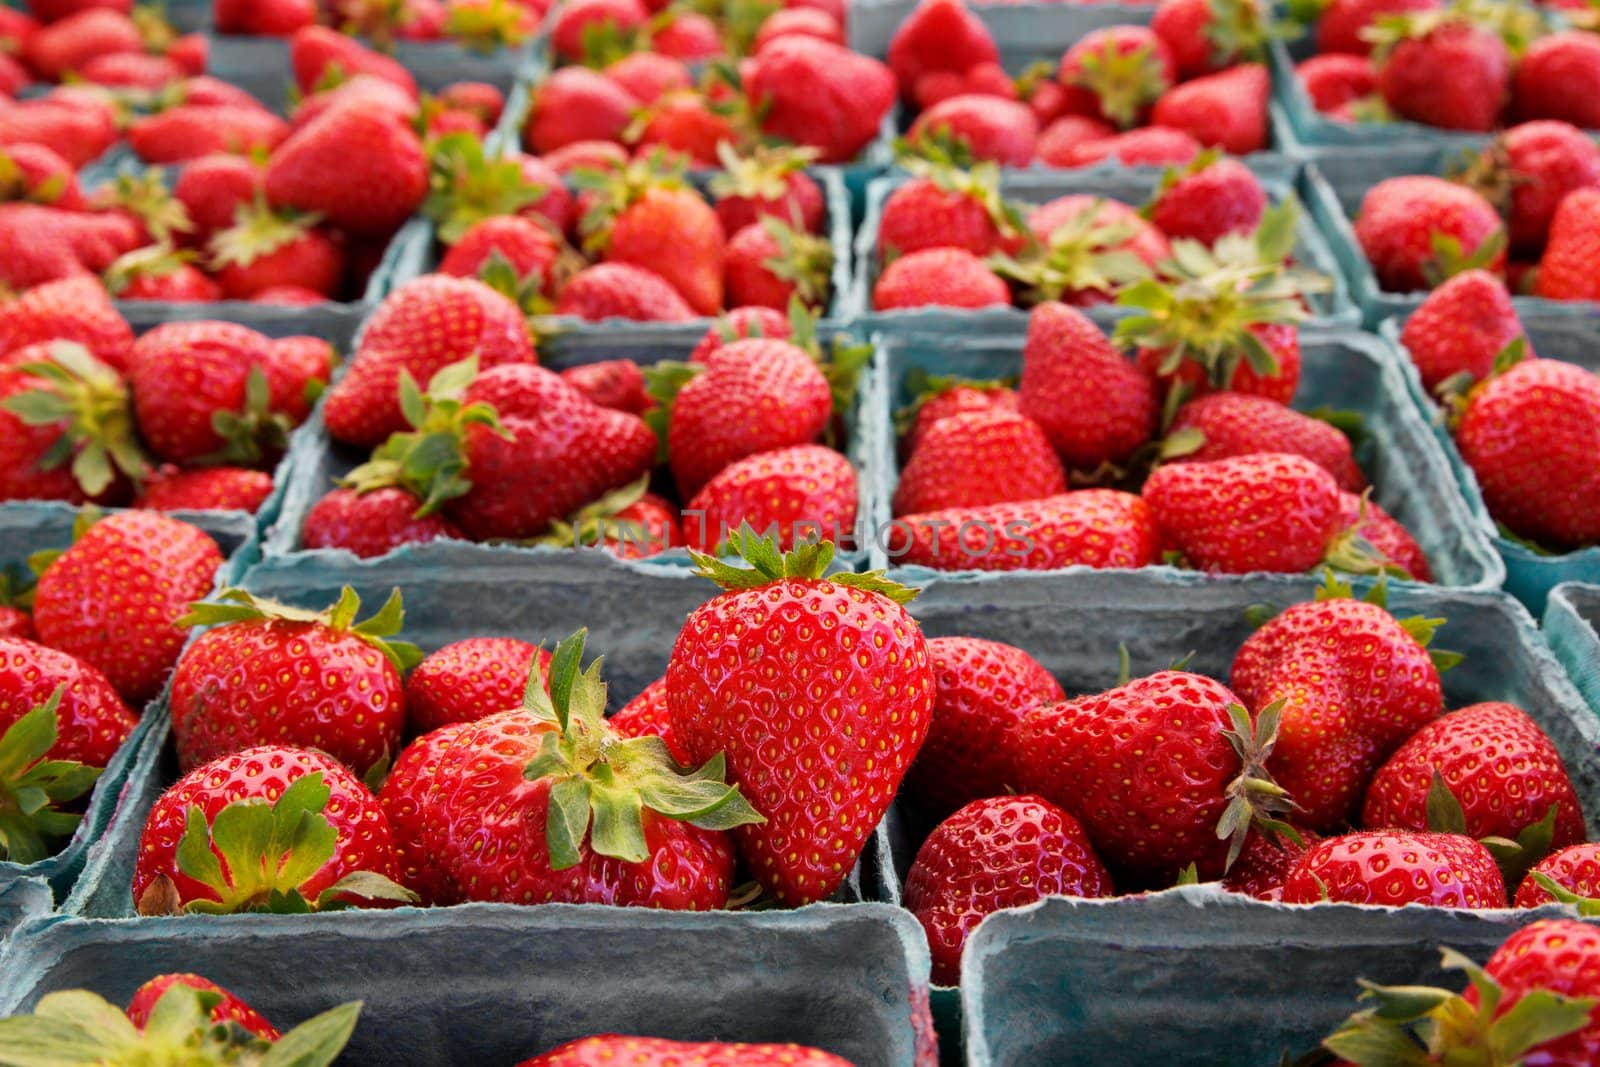 Narrow focus horizontal strawberries by bobkeenan